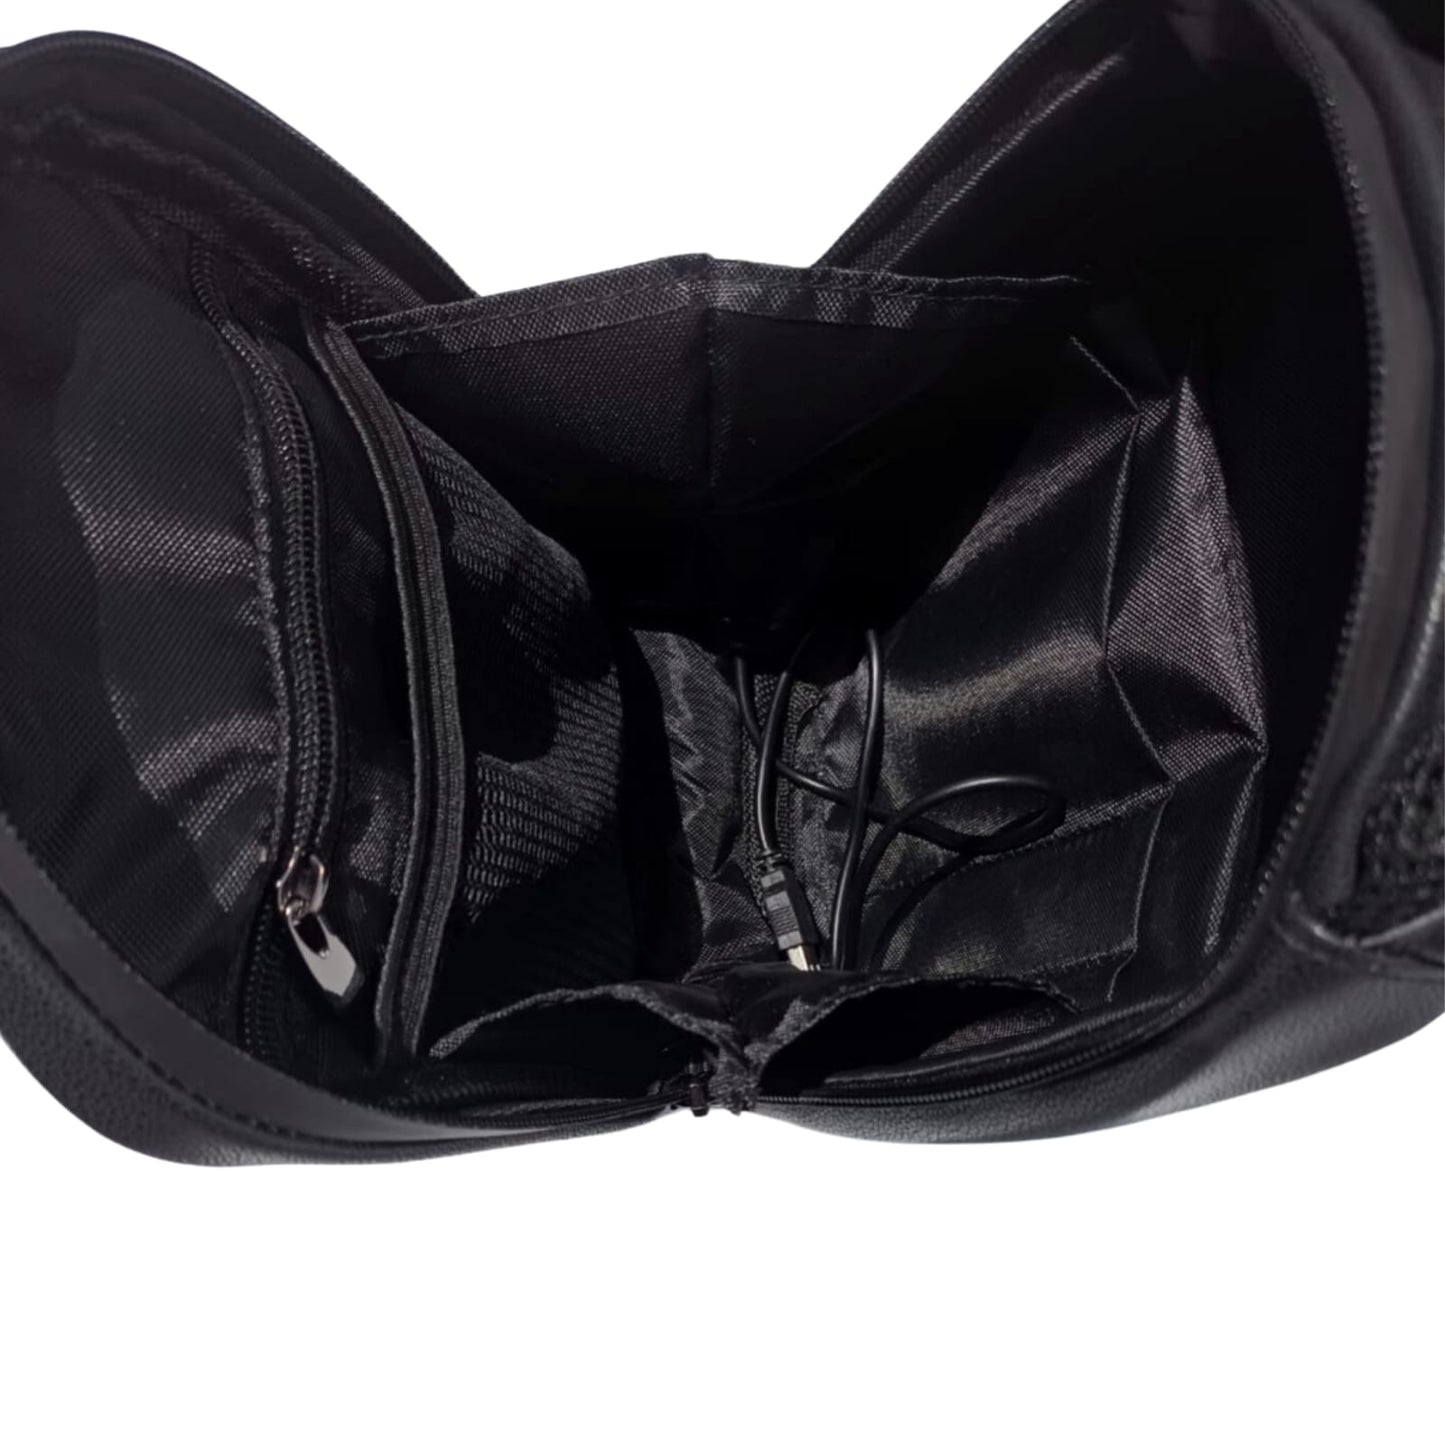 Tego Hardshell Backpack Sling Bag USB Crossbody shoulder Bag Chest Bag for Men Women